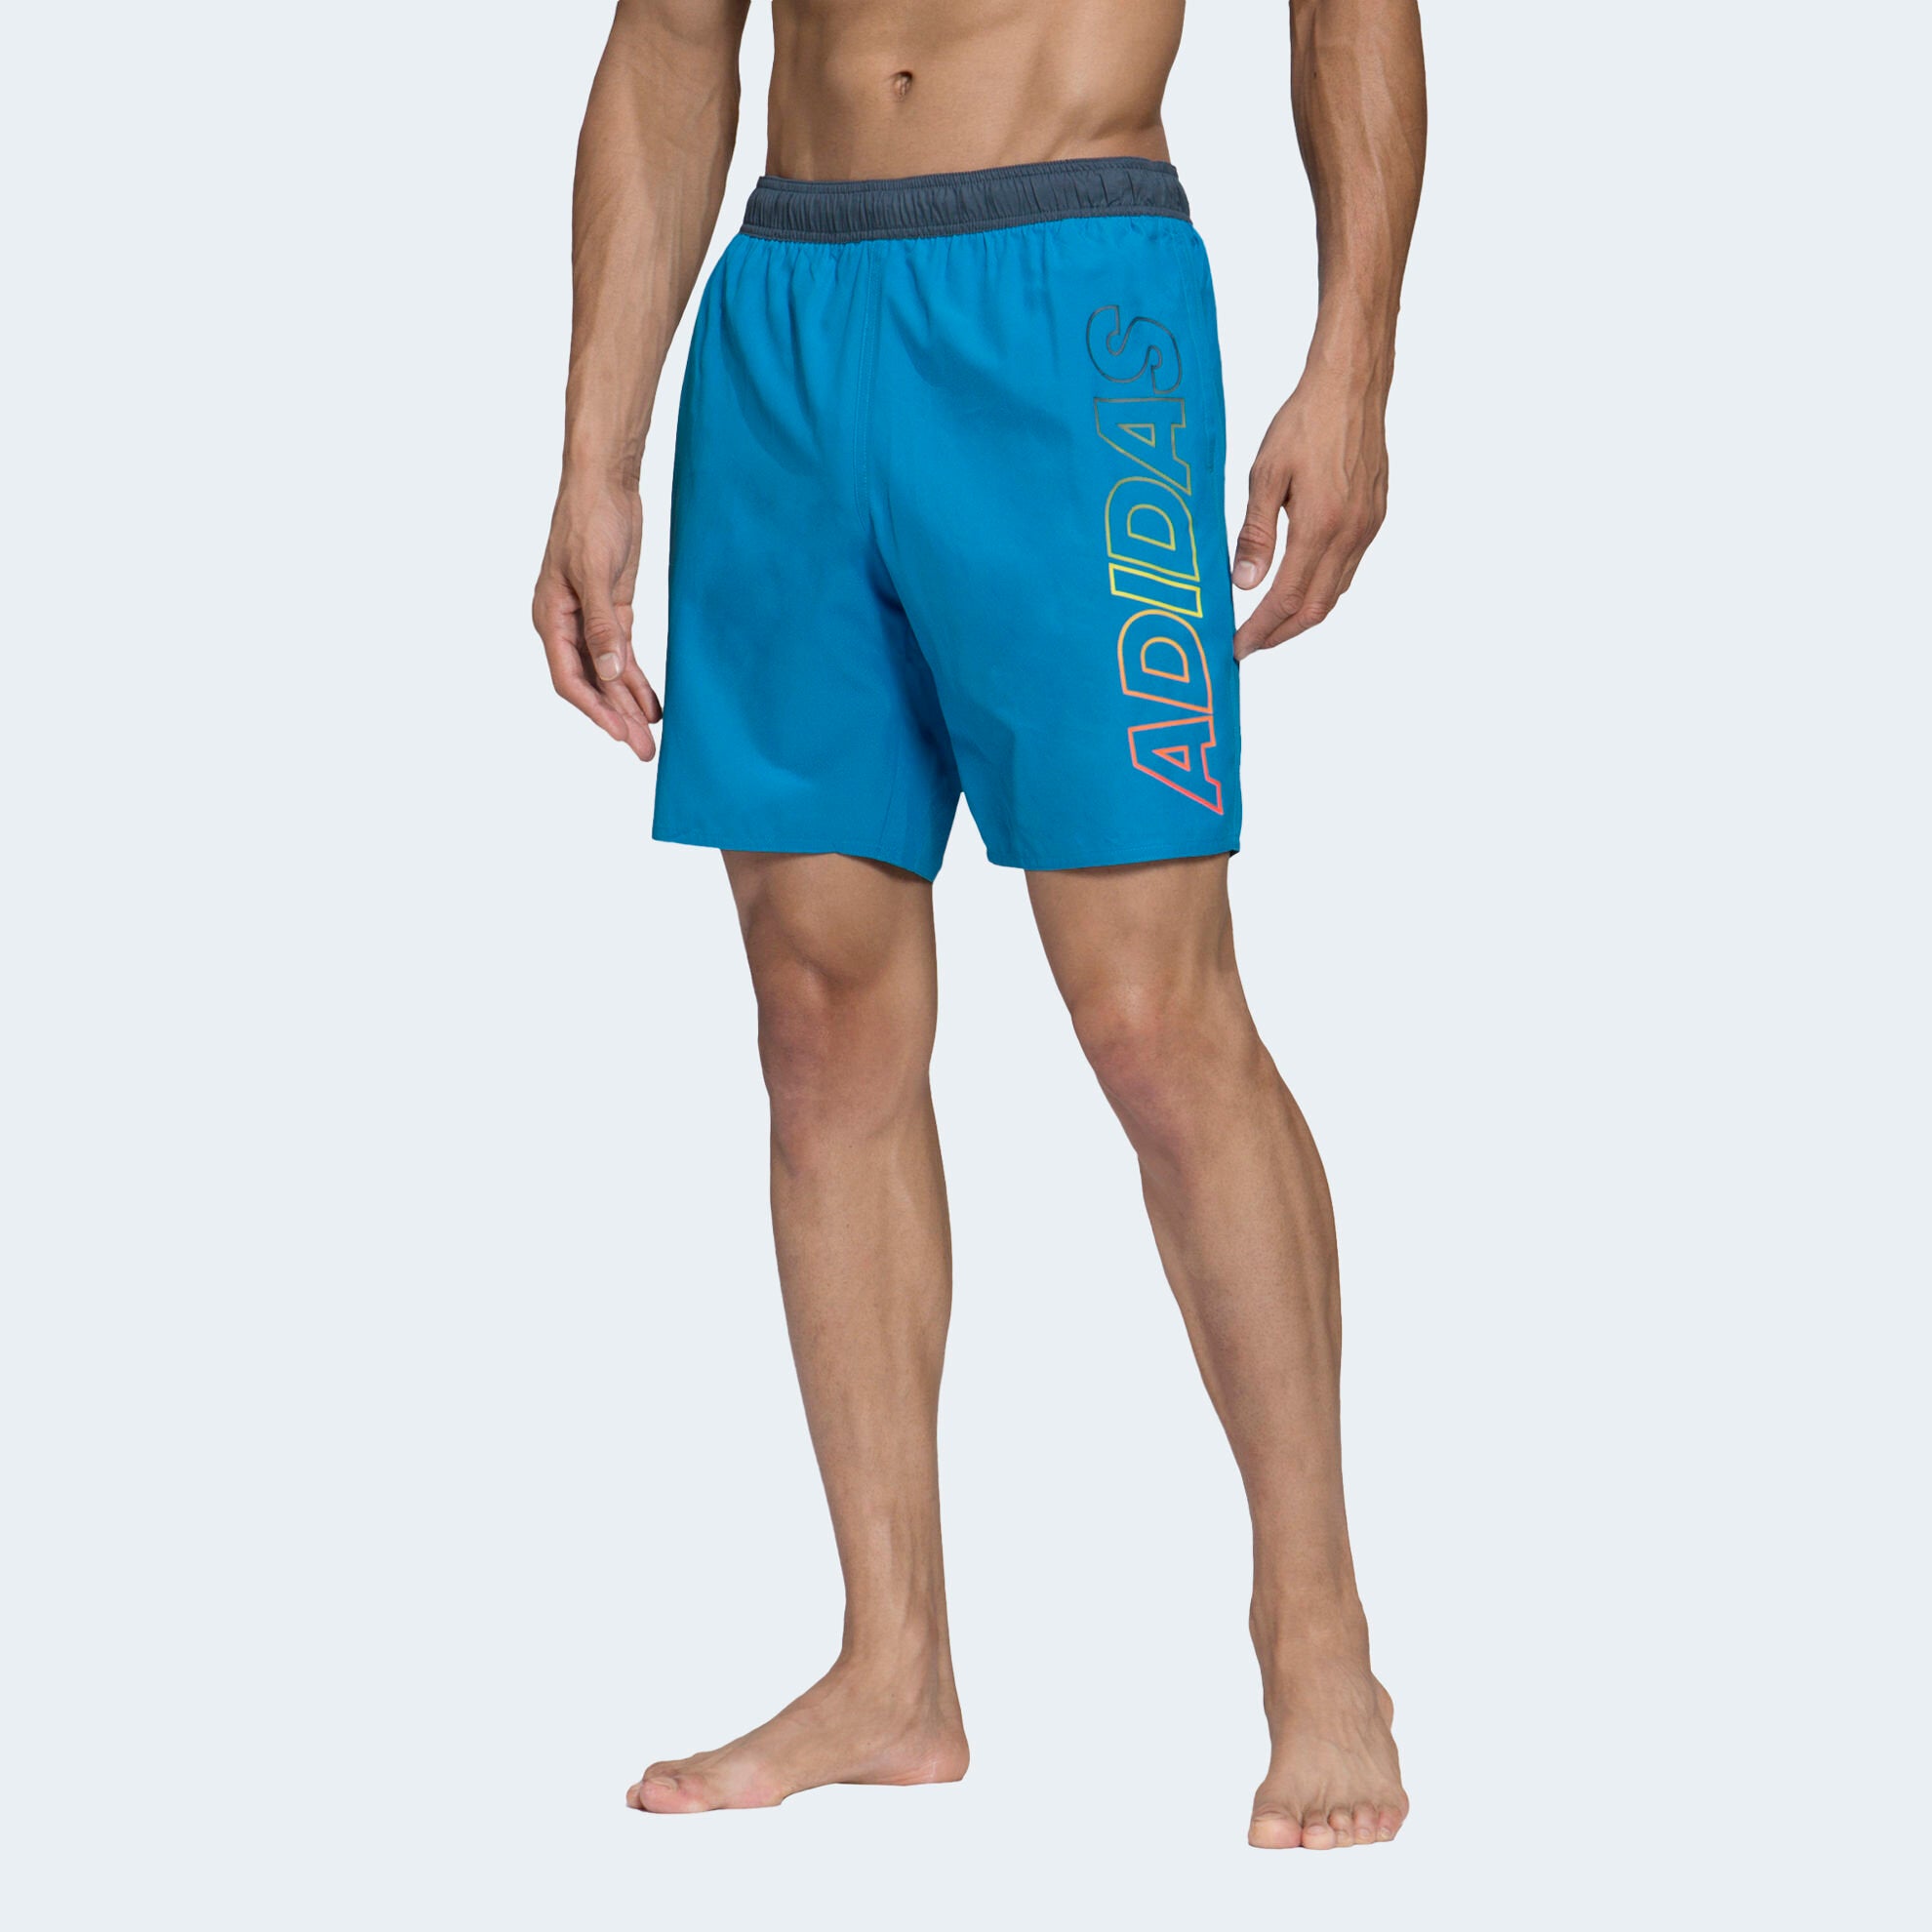 tradesports.co.uk Adidas Men's Lineage CLX Swim Shorts - Blue